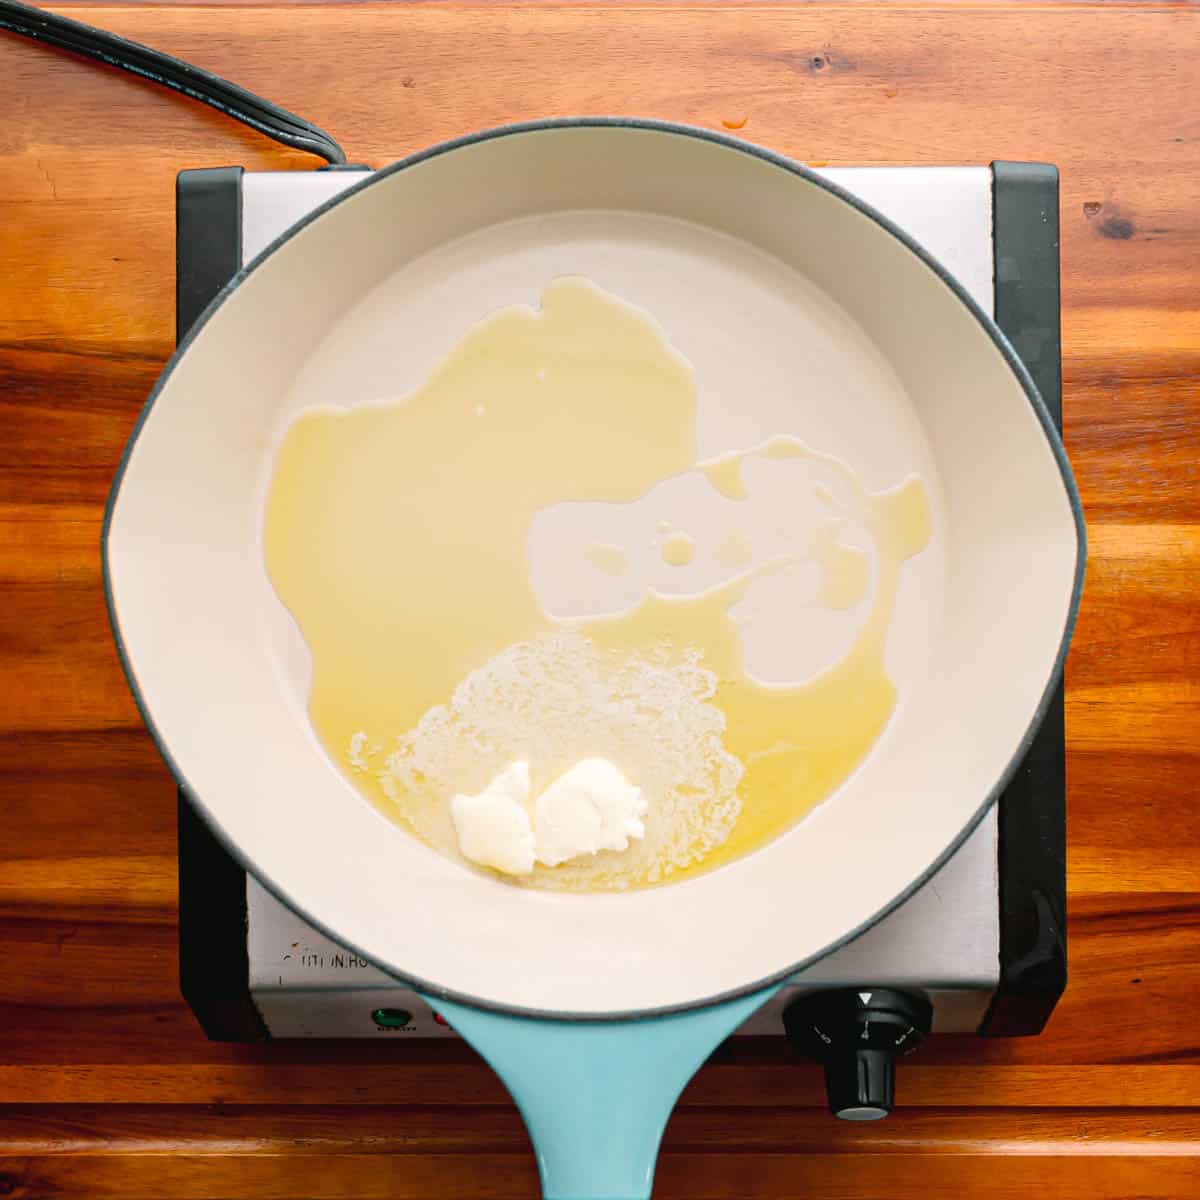 In a sauté pan, heat up some oil and melt the butter over medium-high heat.